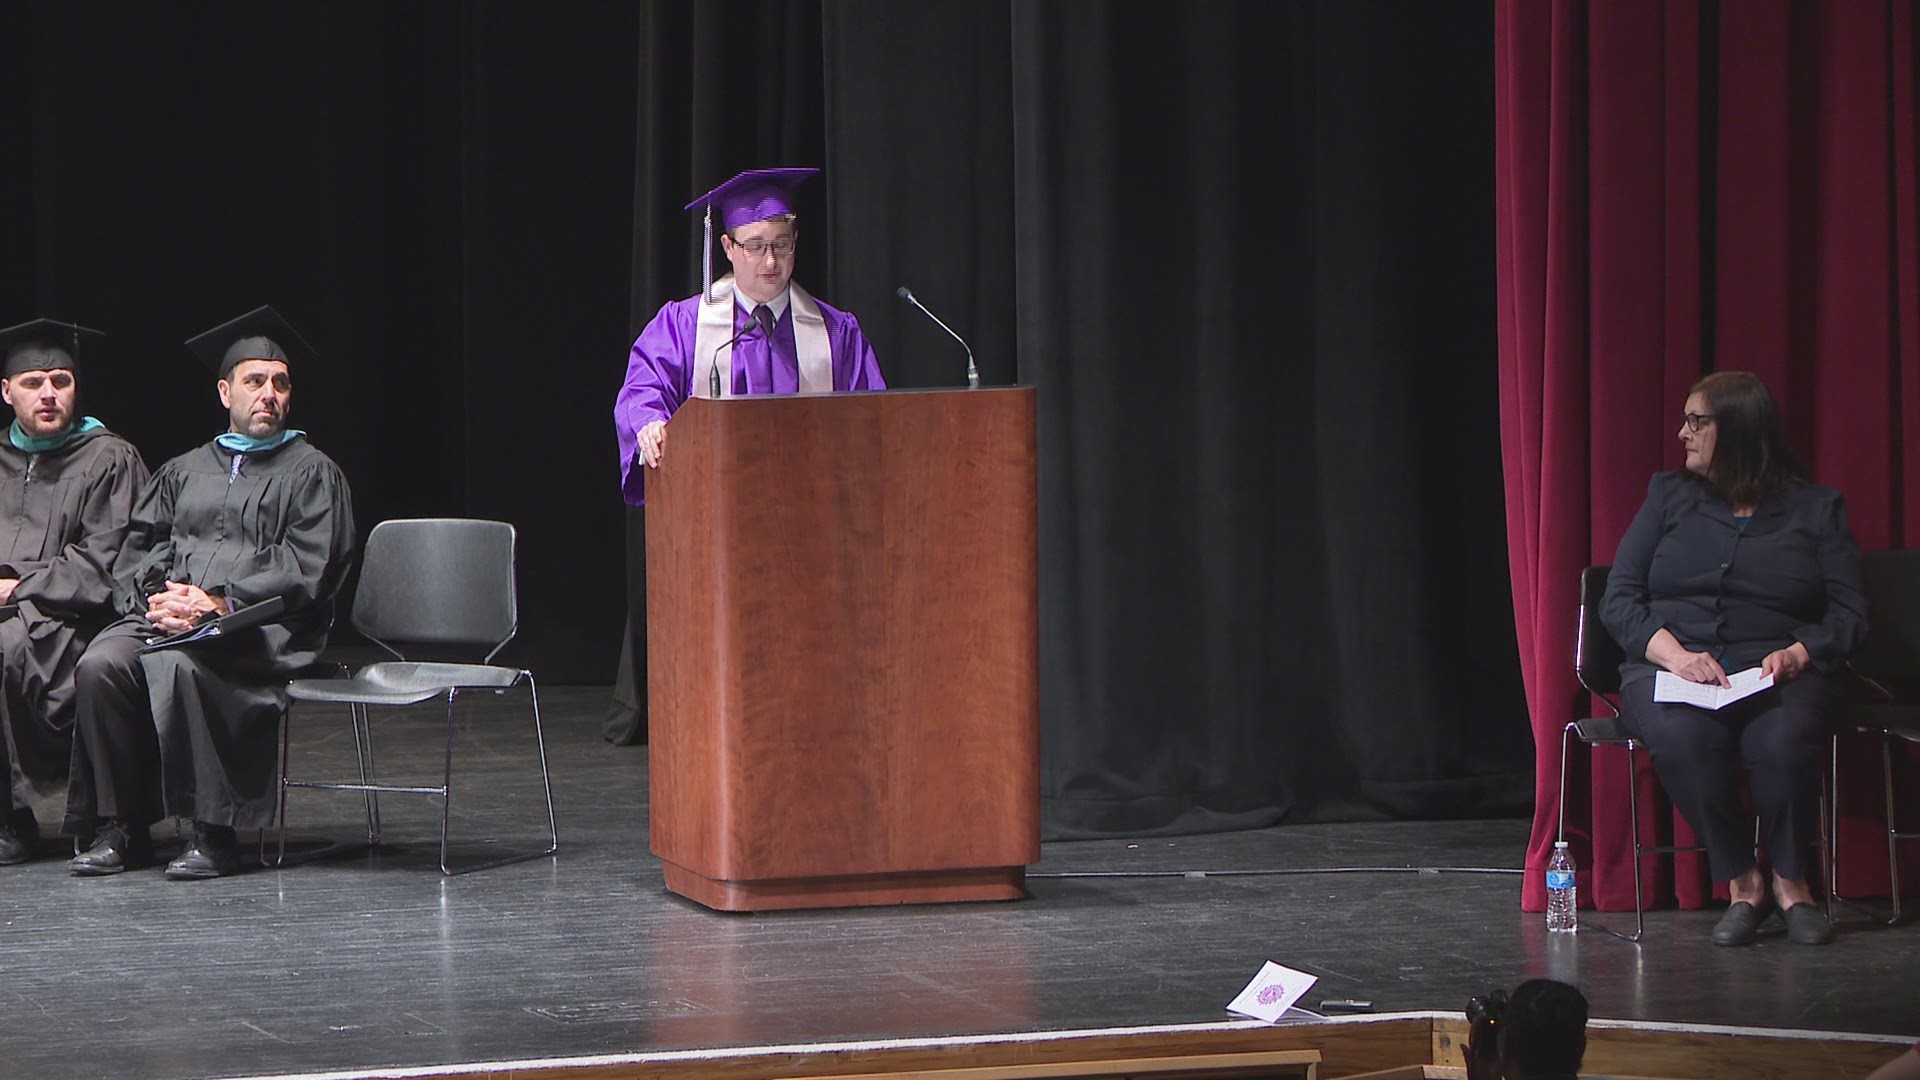 Judge Judy gives commencement speech at Barberton High School